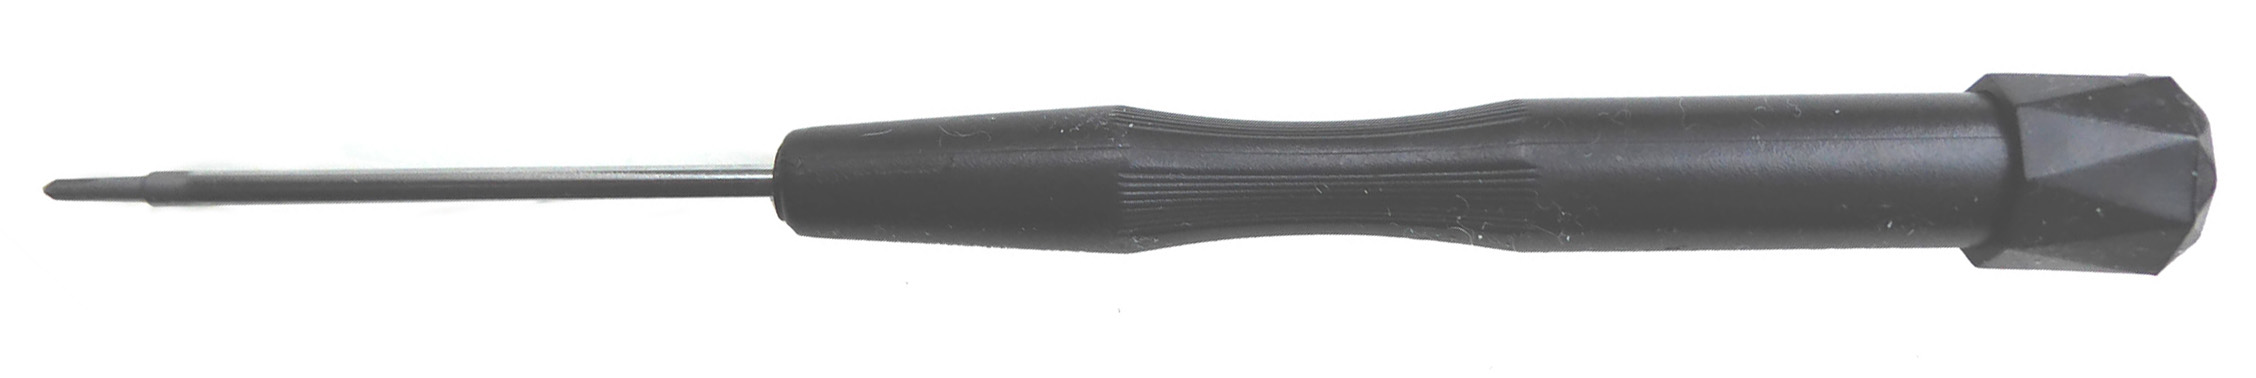 Black handled philips screwdriver size PH00